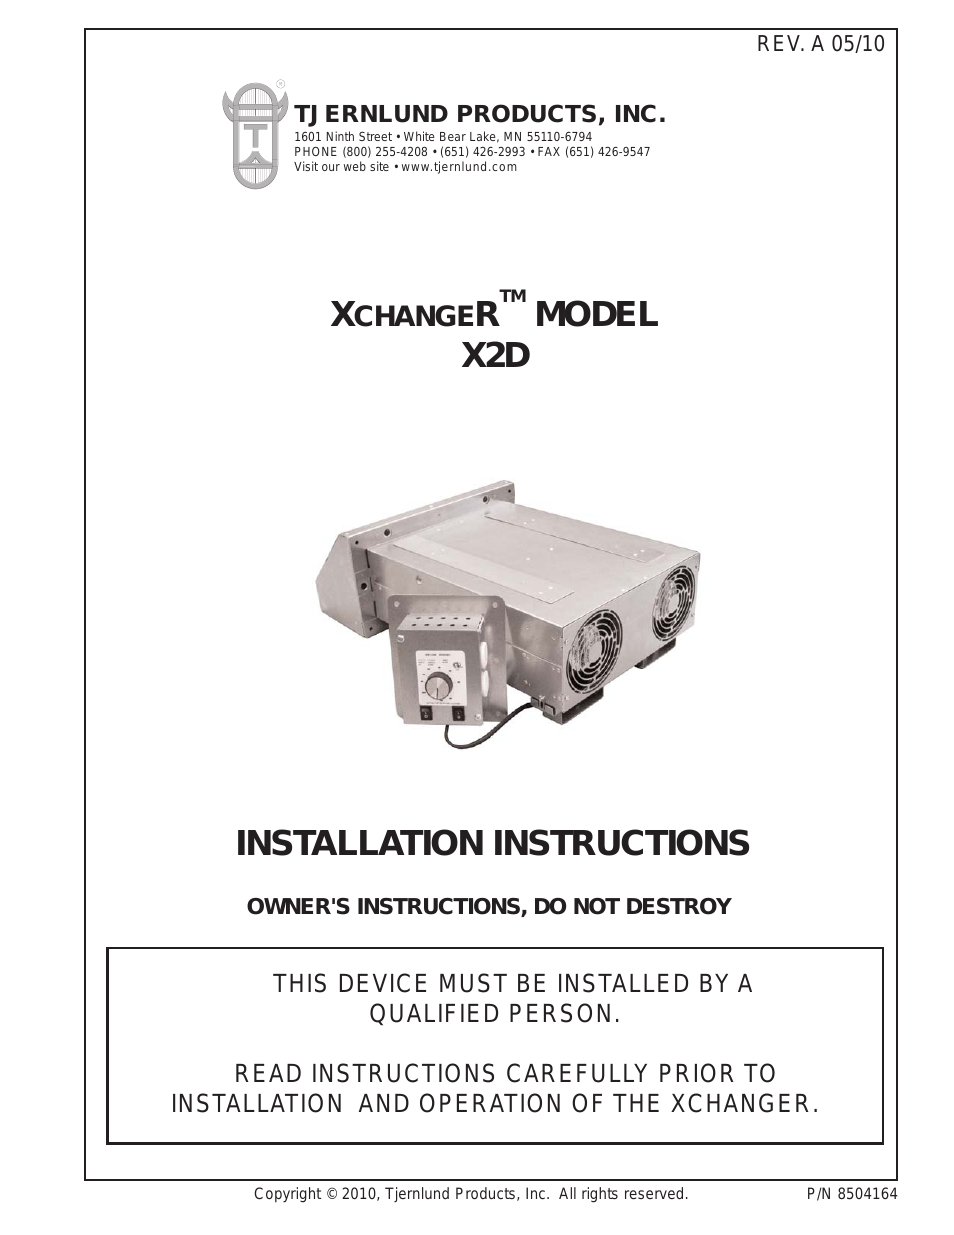 X2D XCHANGER Reversible Basement Fan 8504164 Rev A 05/10